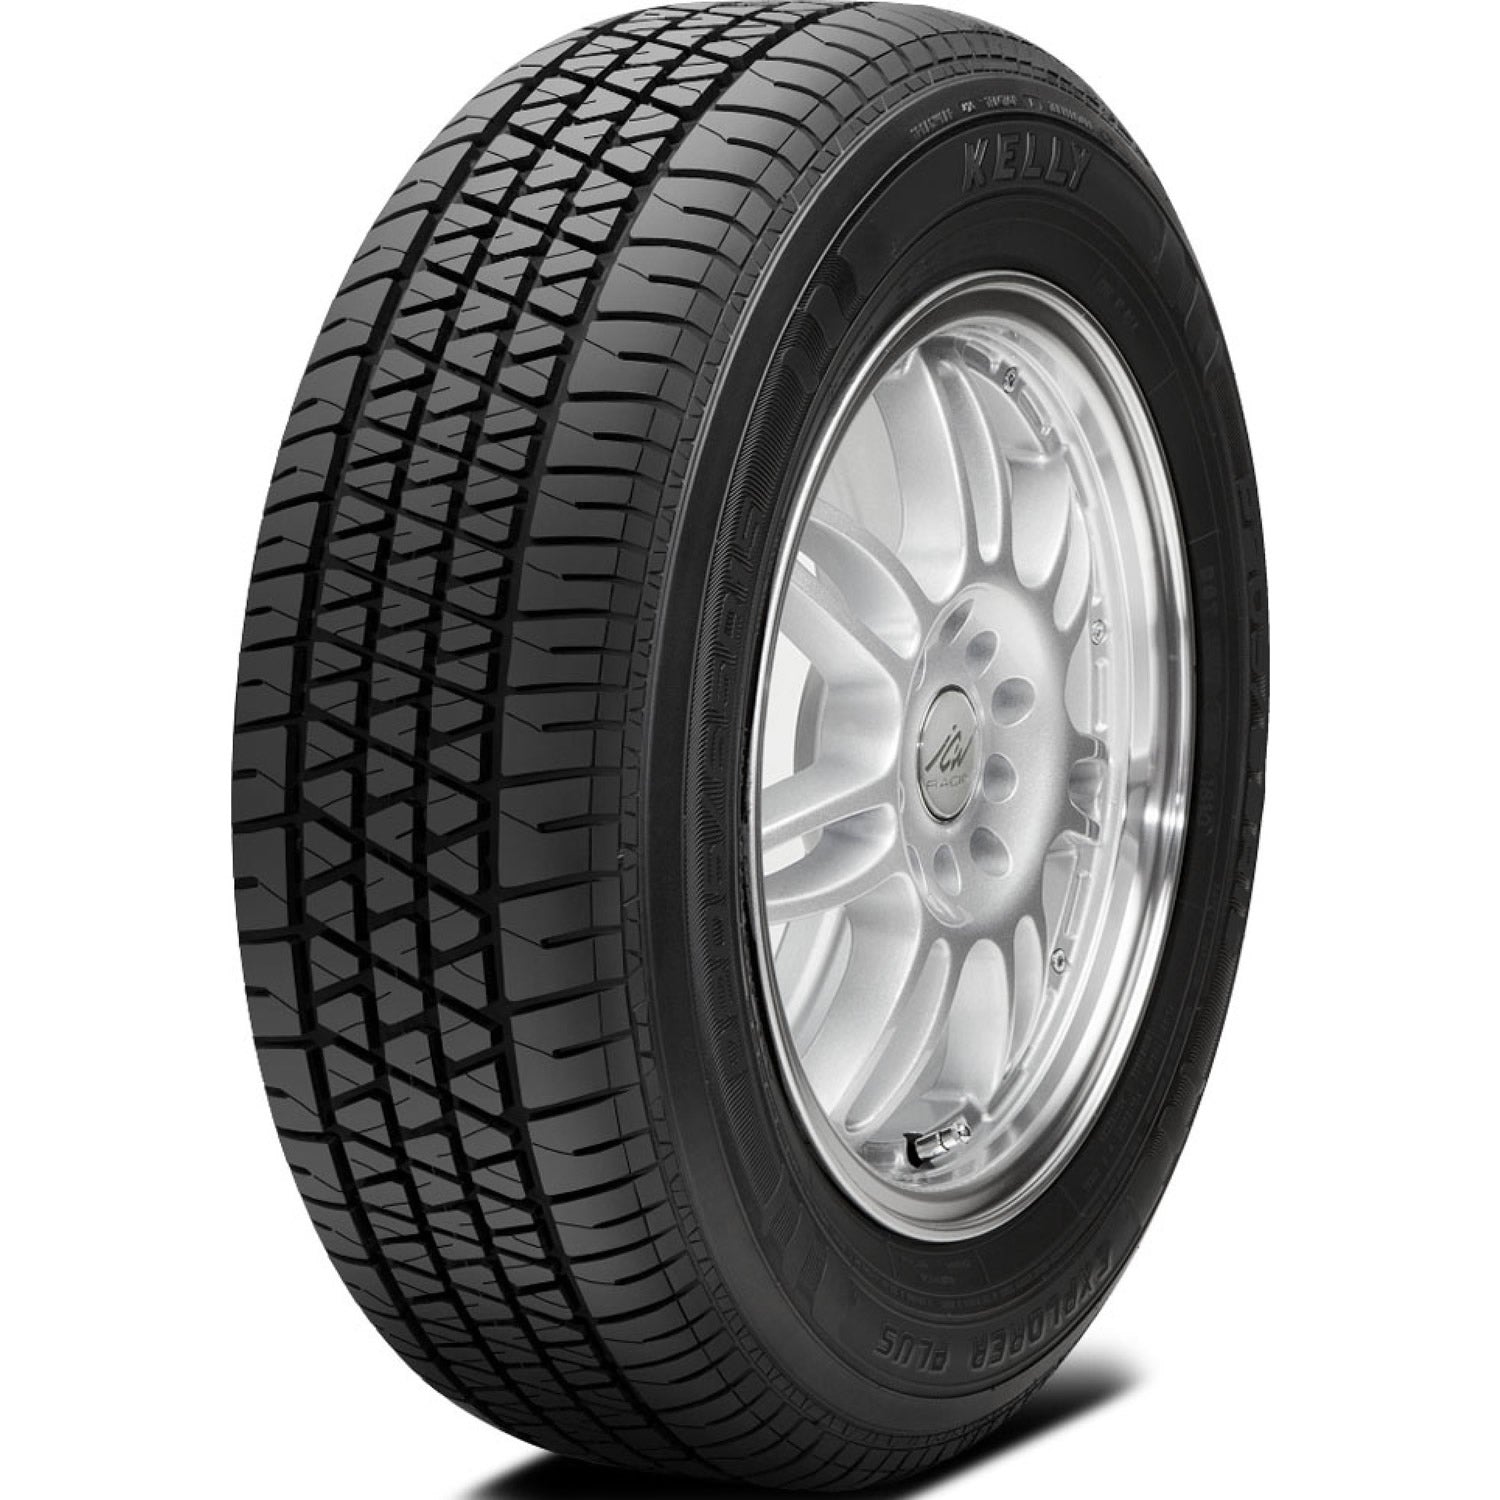 KELLY EXPLORER PLUS 185/60R15 (23.8X7.5R 15) Tires